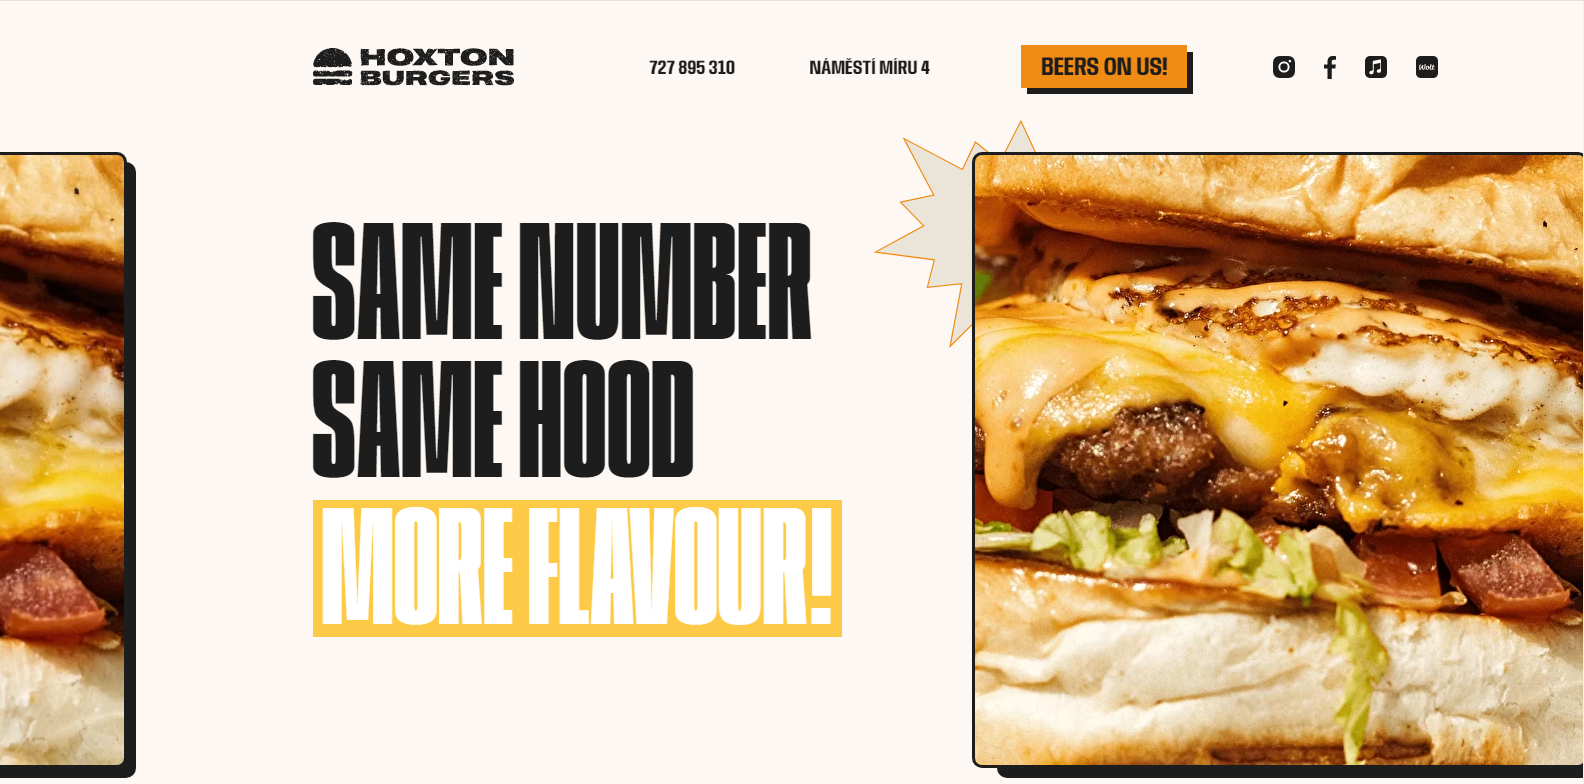 Image of Hoxton Burgers